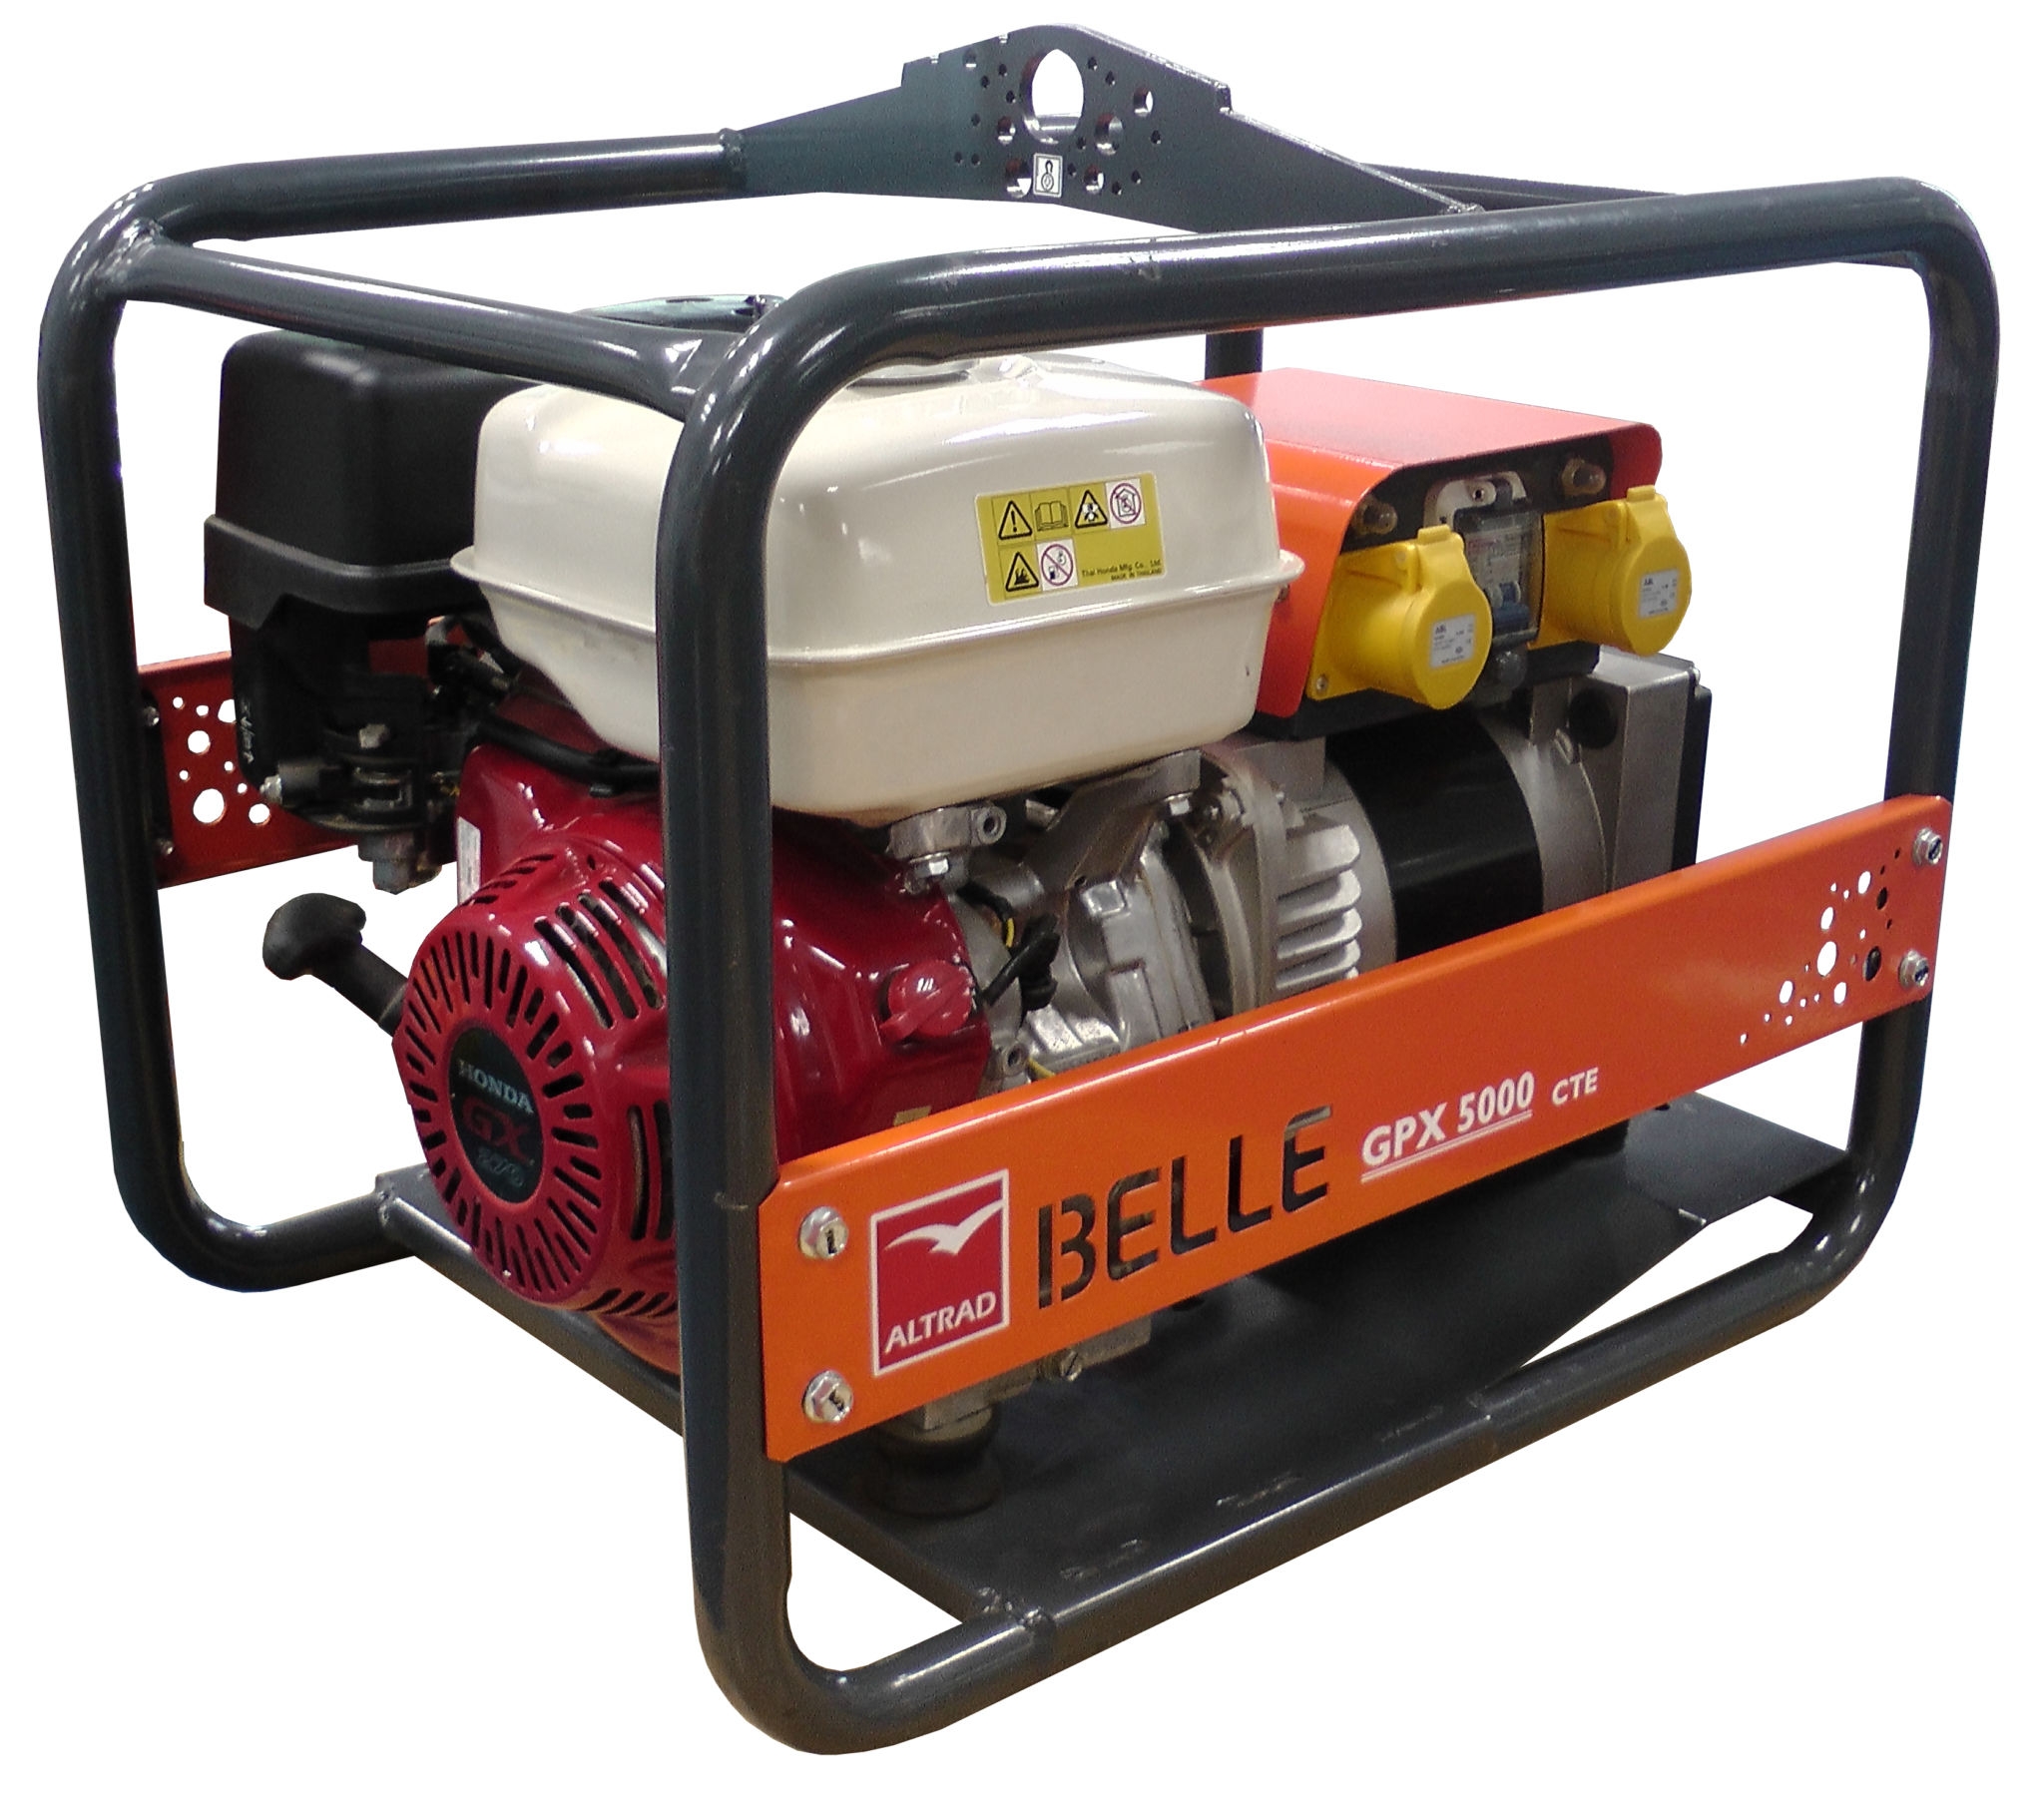 ALTRAD Belle GPX Power Generators – GPX 5000 CTE – Honda GX270 Petrol